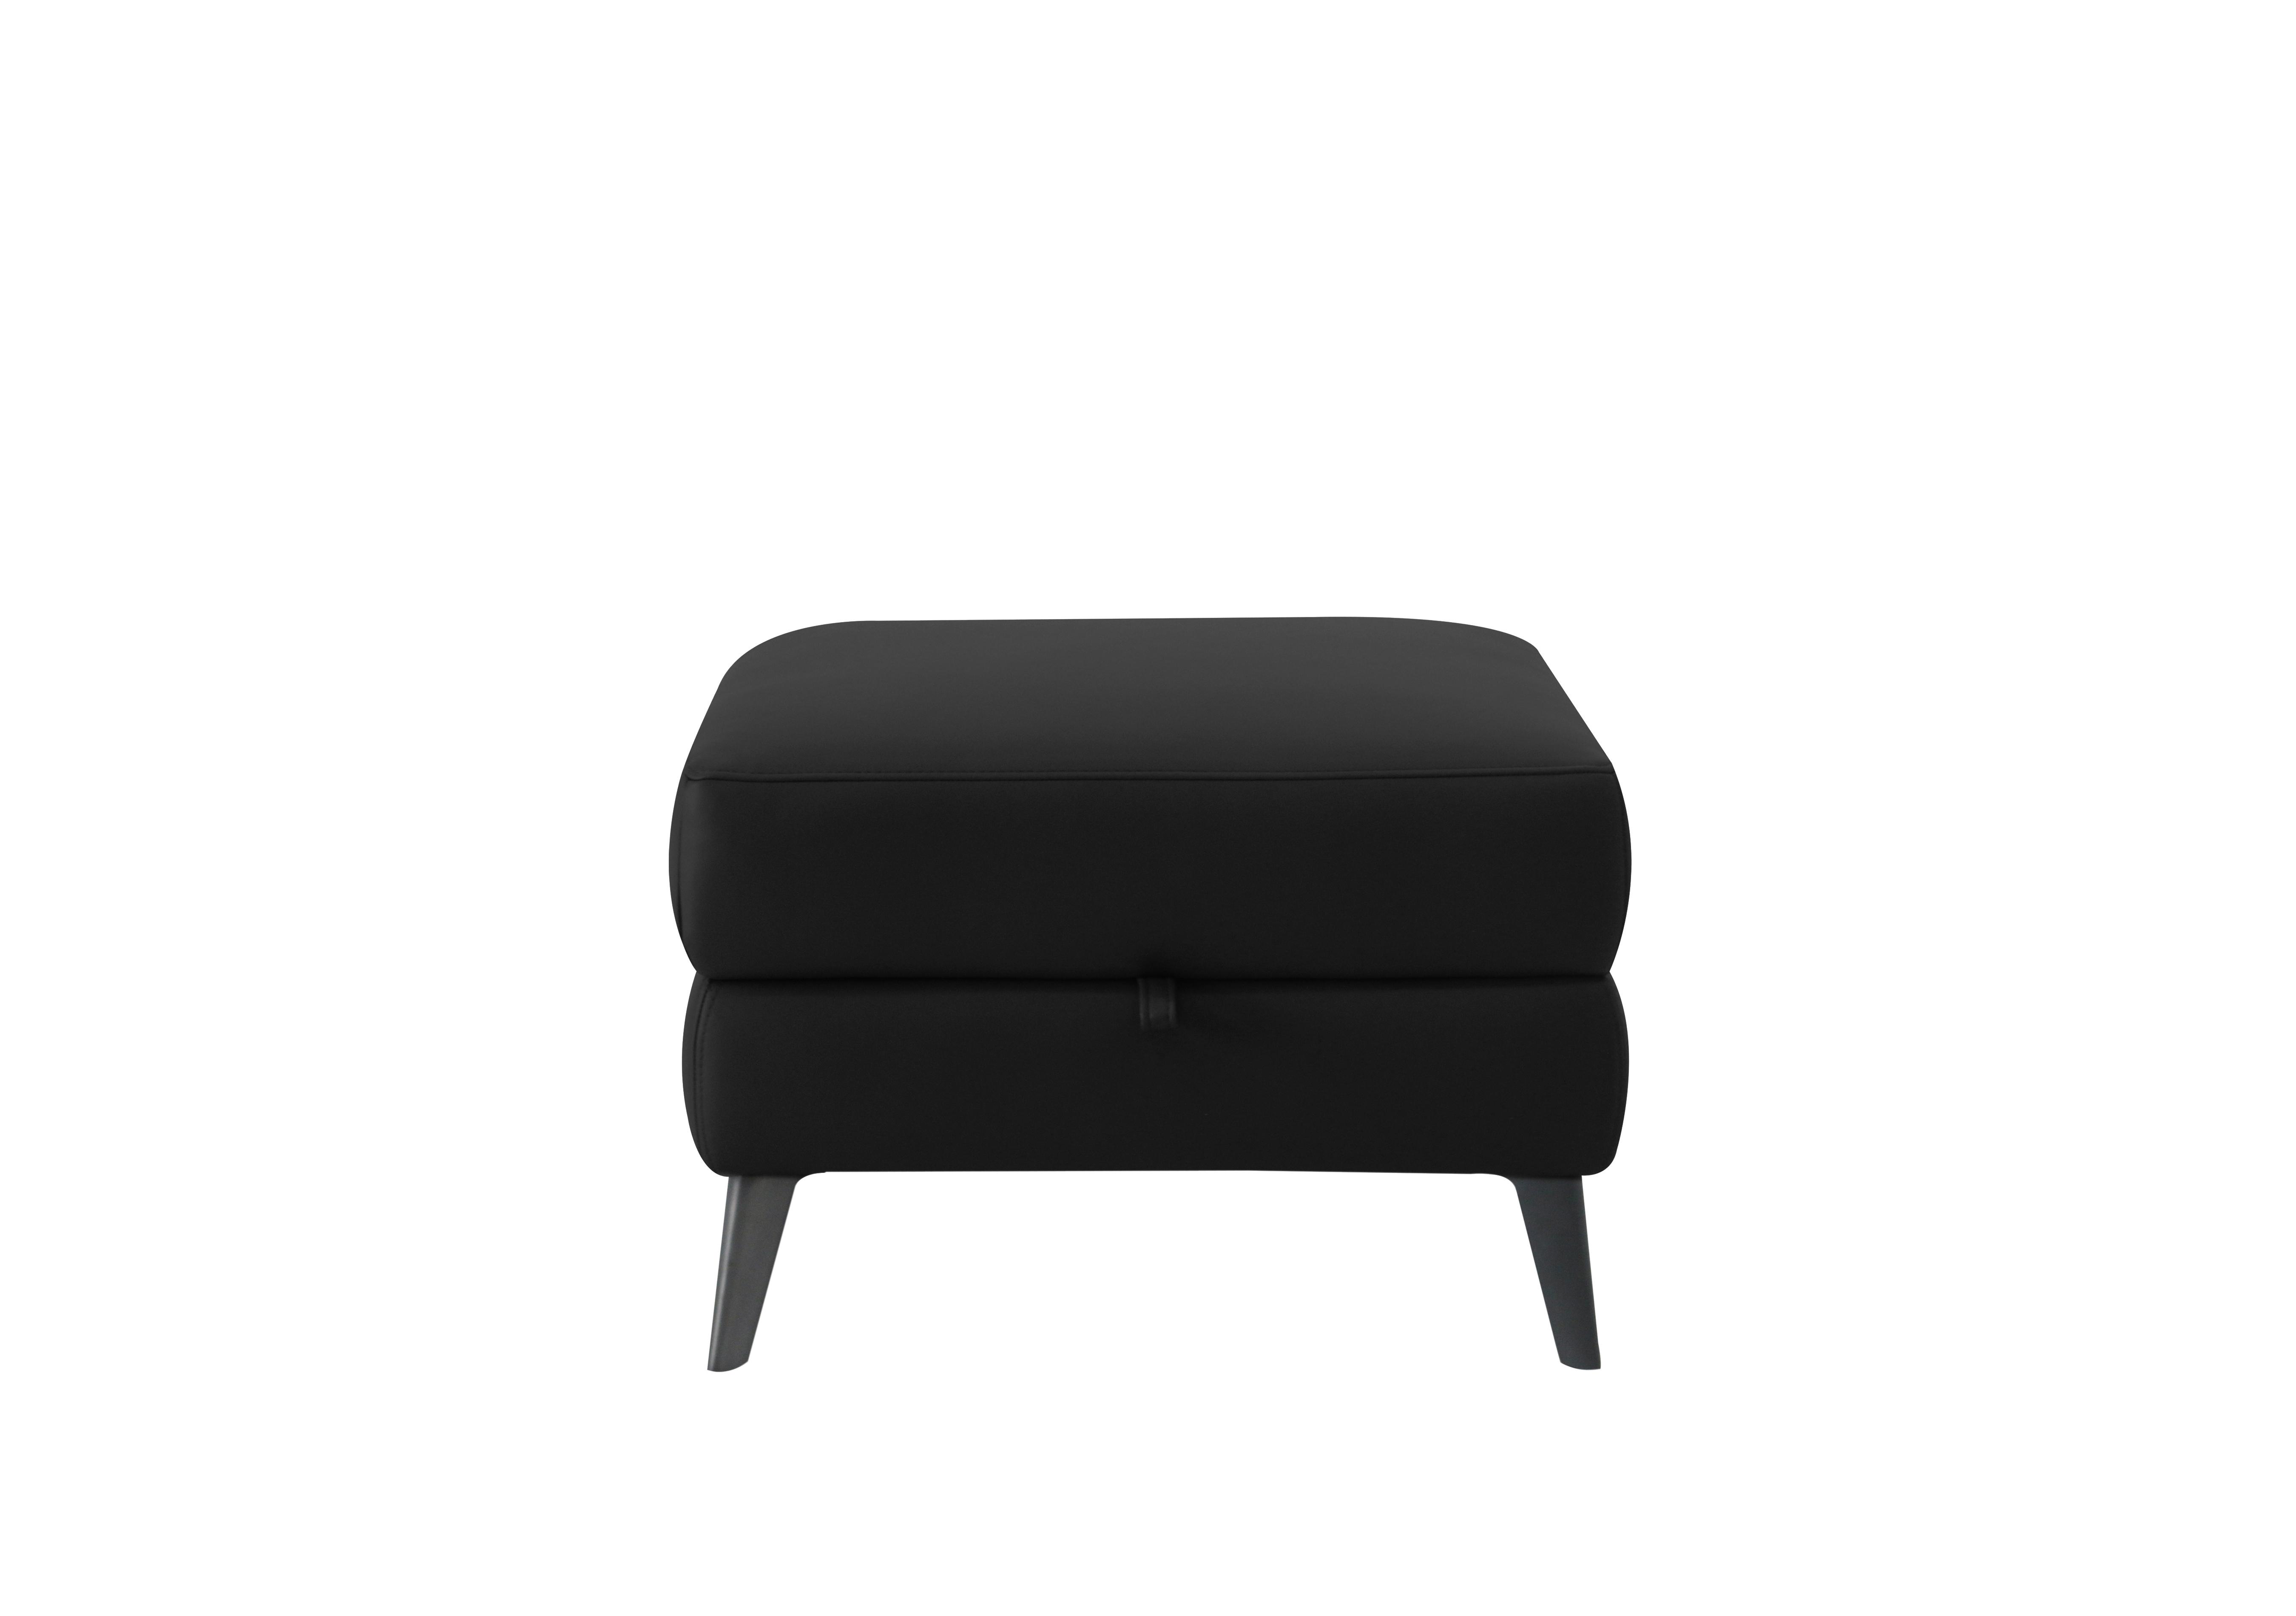 Huxley Leather Storage Footstool in Nn-514e Black on Furniture Village